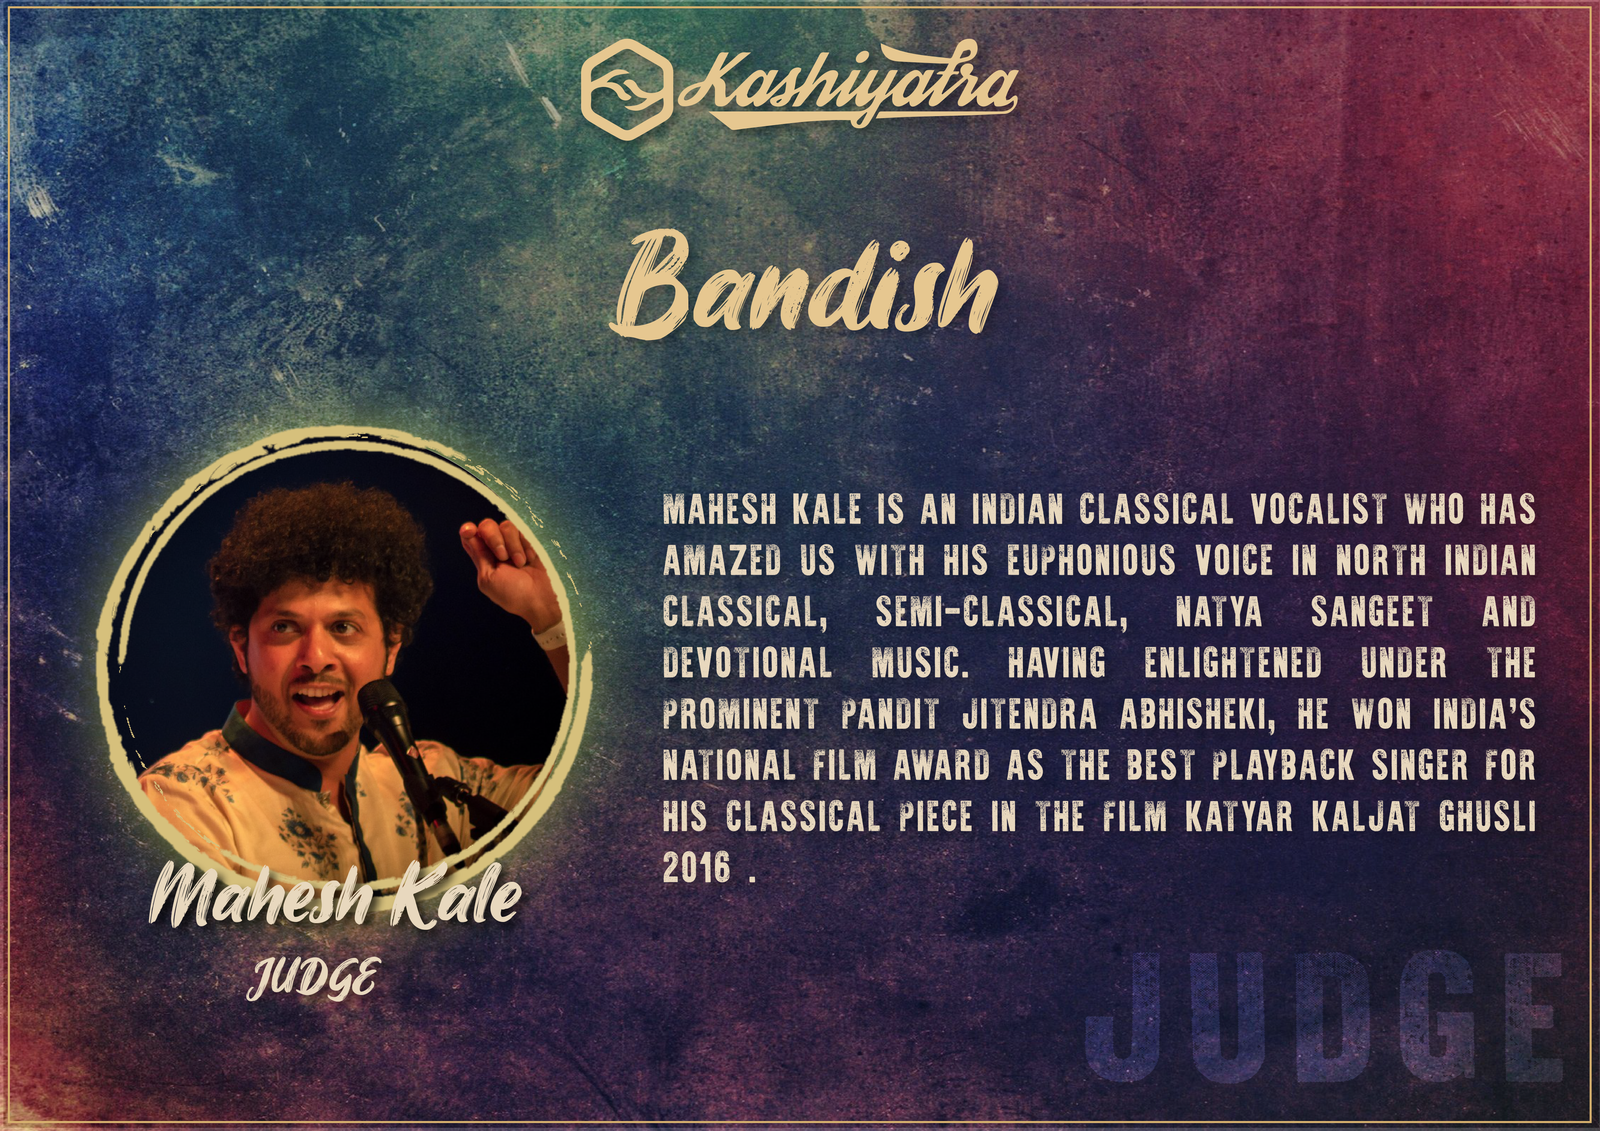 : Mahesh Kale to be the judge for “Bandish”, the Singing Competition of Kashiyatra'23